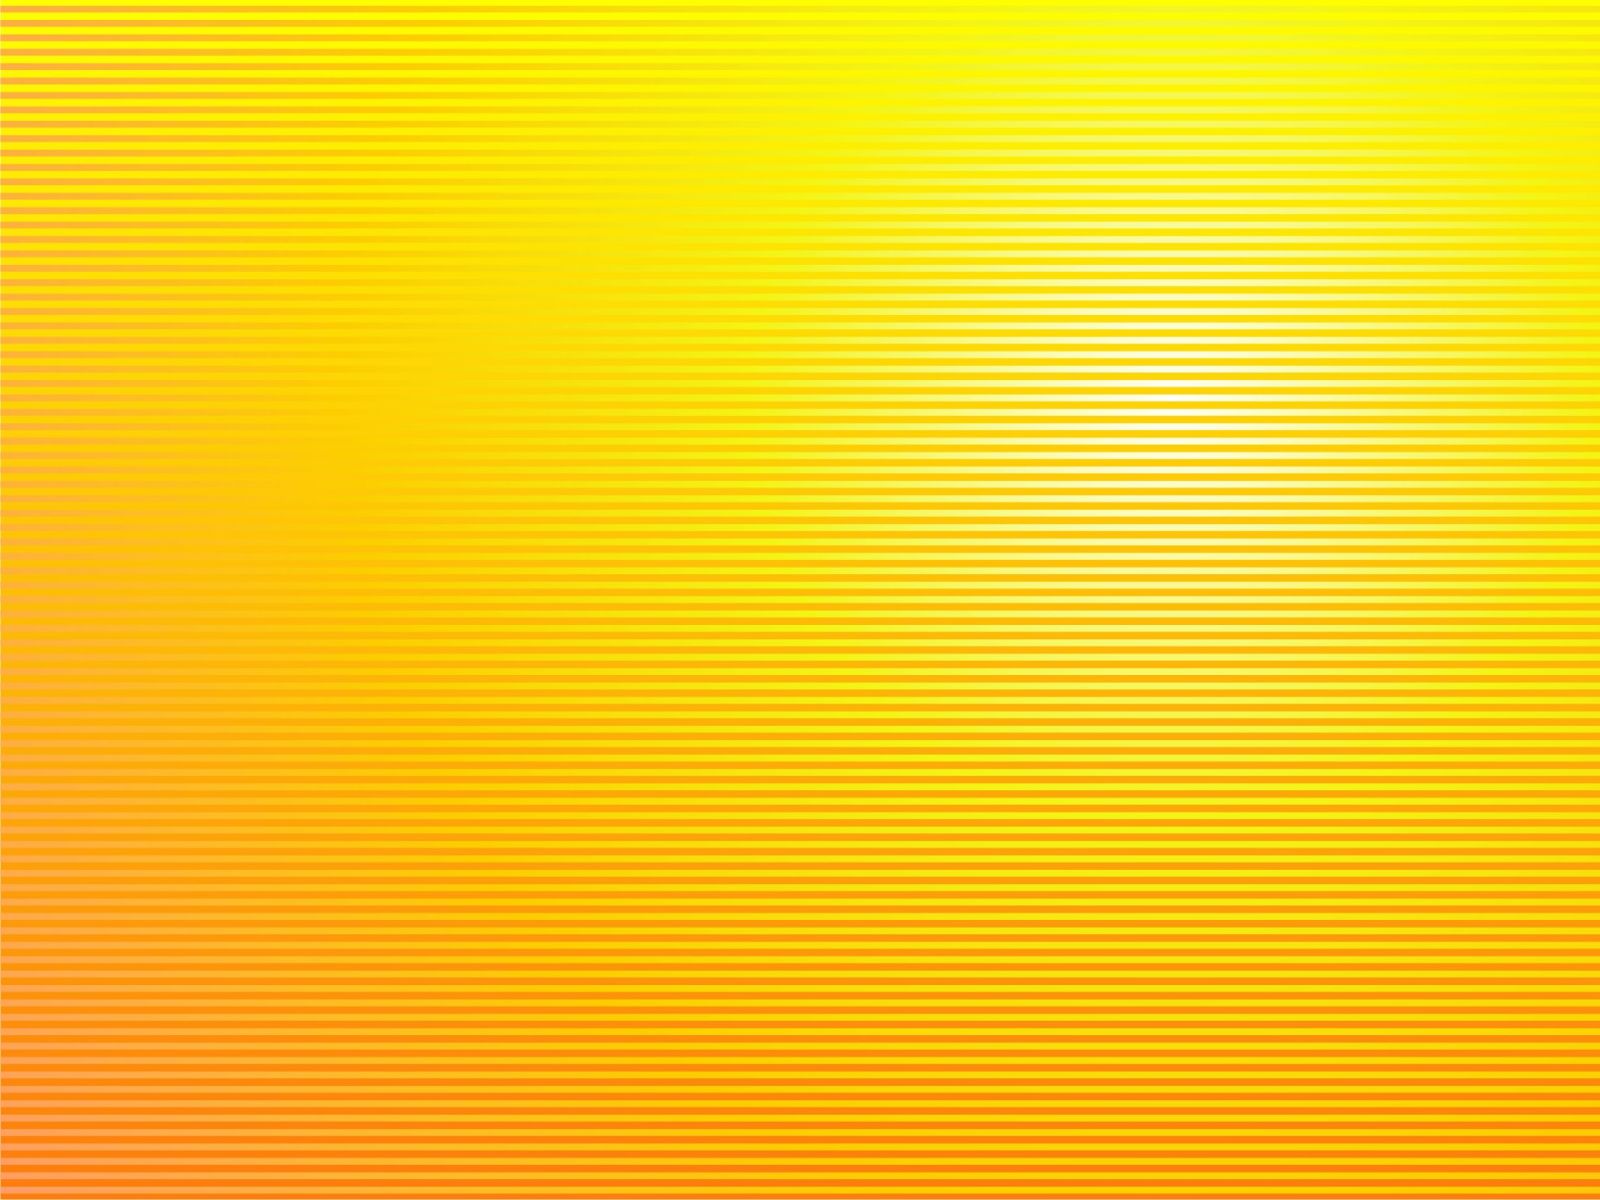 yellow and white wallpaper,orange,yellow,green,text,line